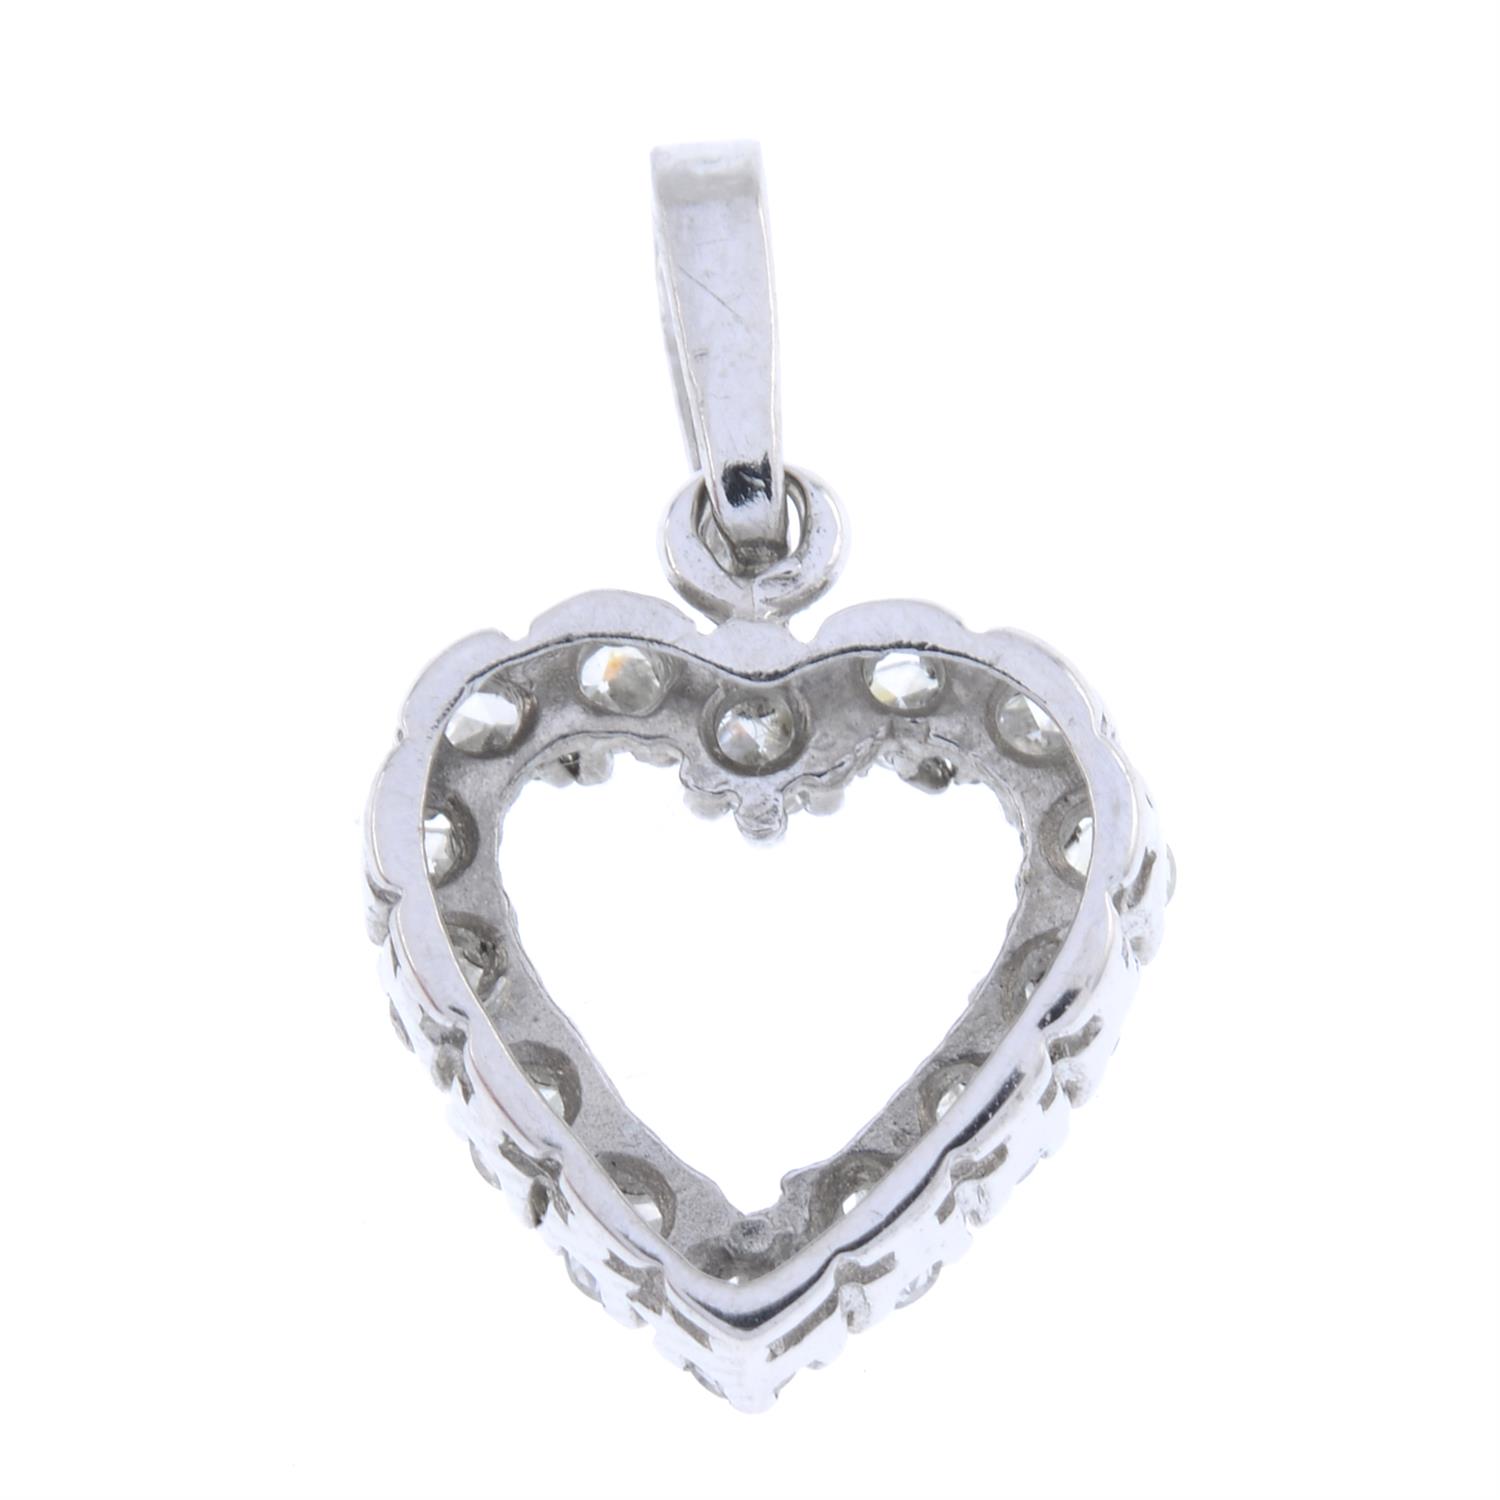 Diamond heart-shape pendant - Image 2 of 2